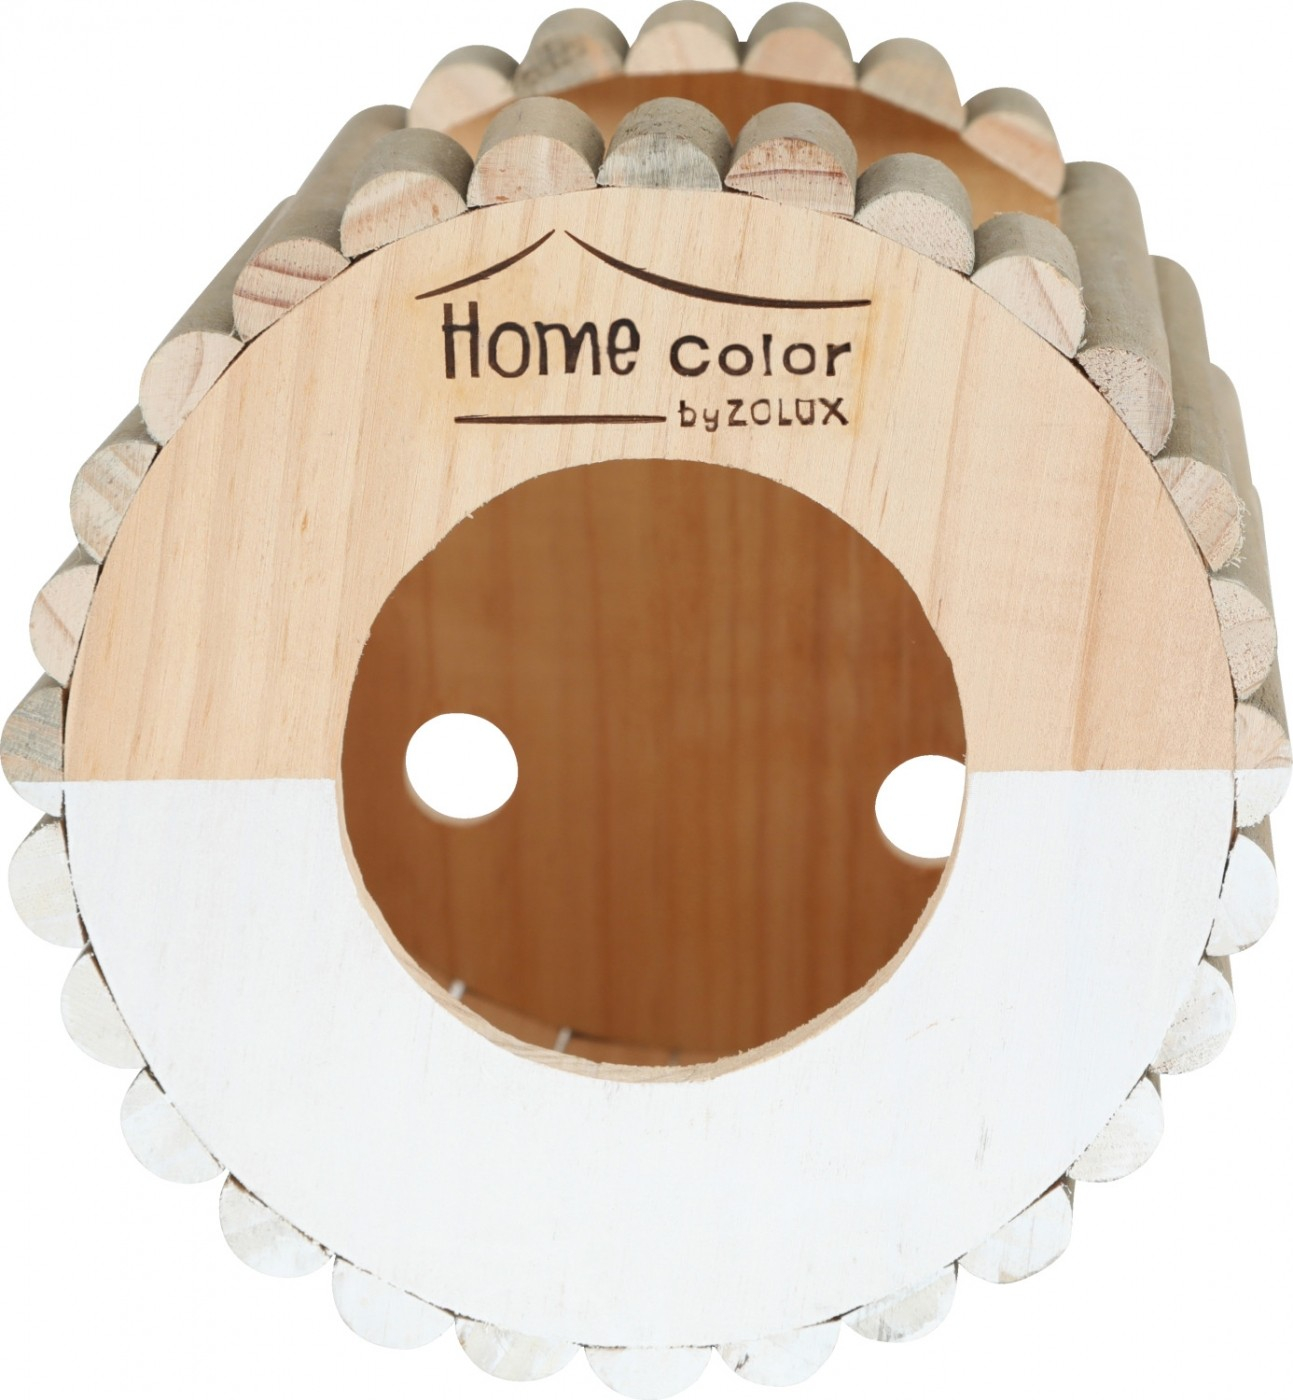 Holzhaus für rundes Nagetier - Home color